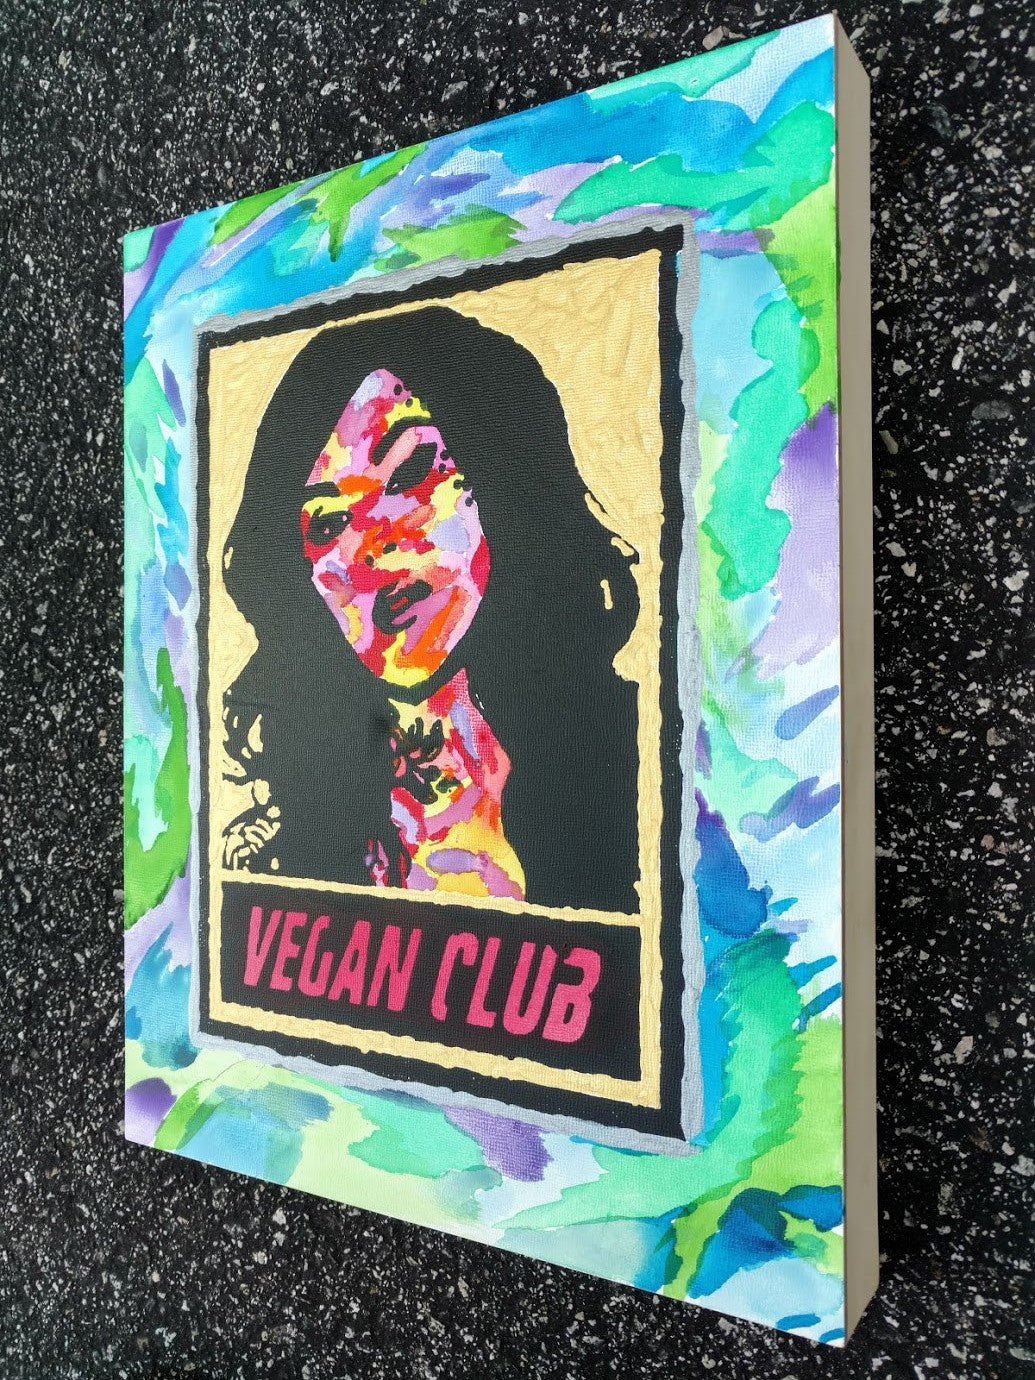 11x14 Original Artwork Collab w Jake @decisionsandreview "Vegan Club" feat Kat Von D